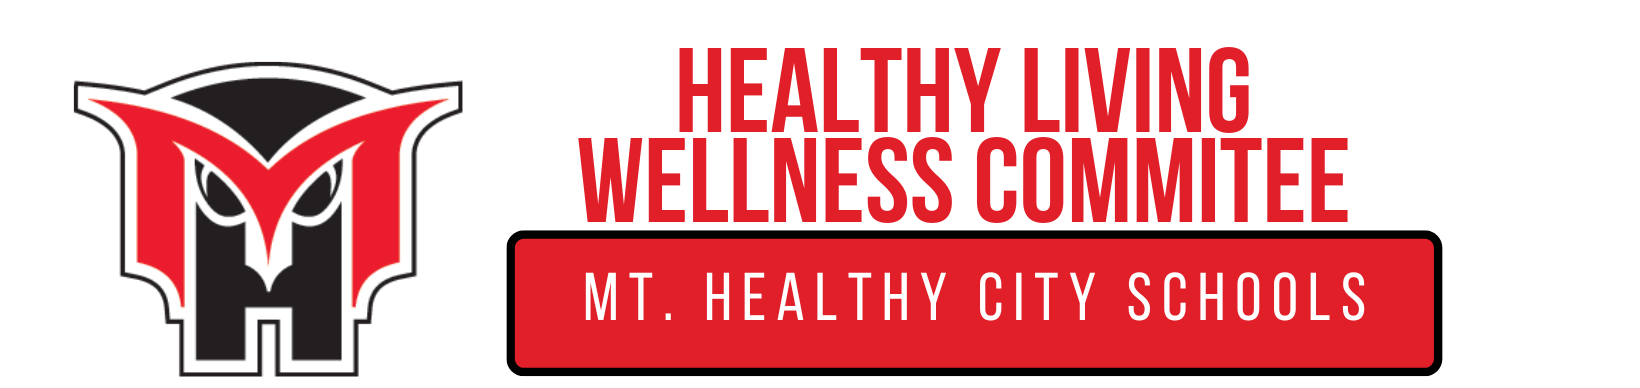 healthy living wellness committee